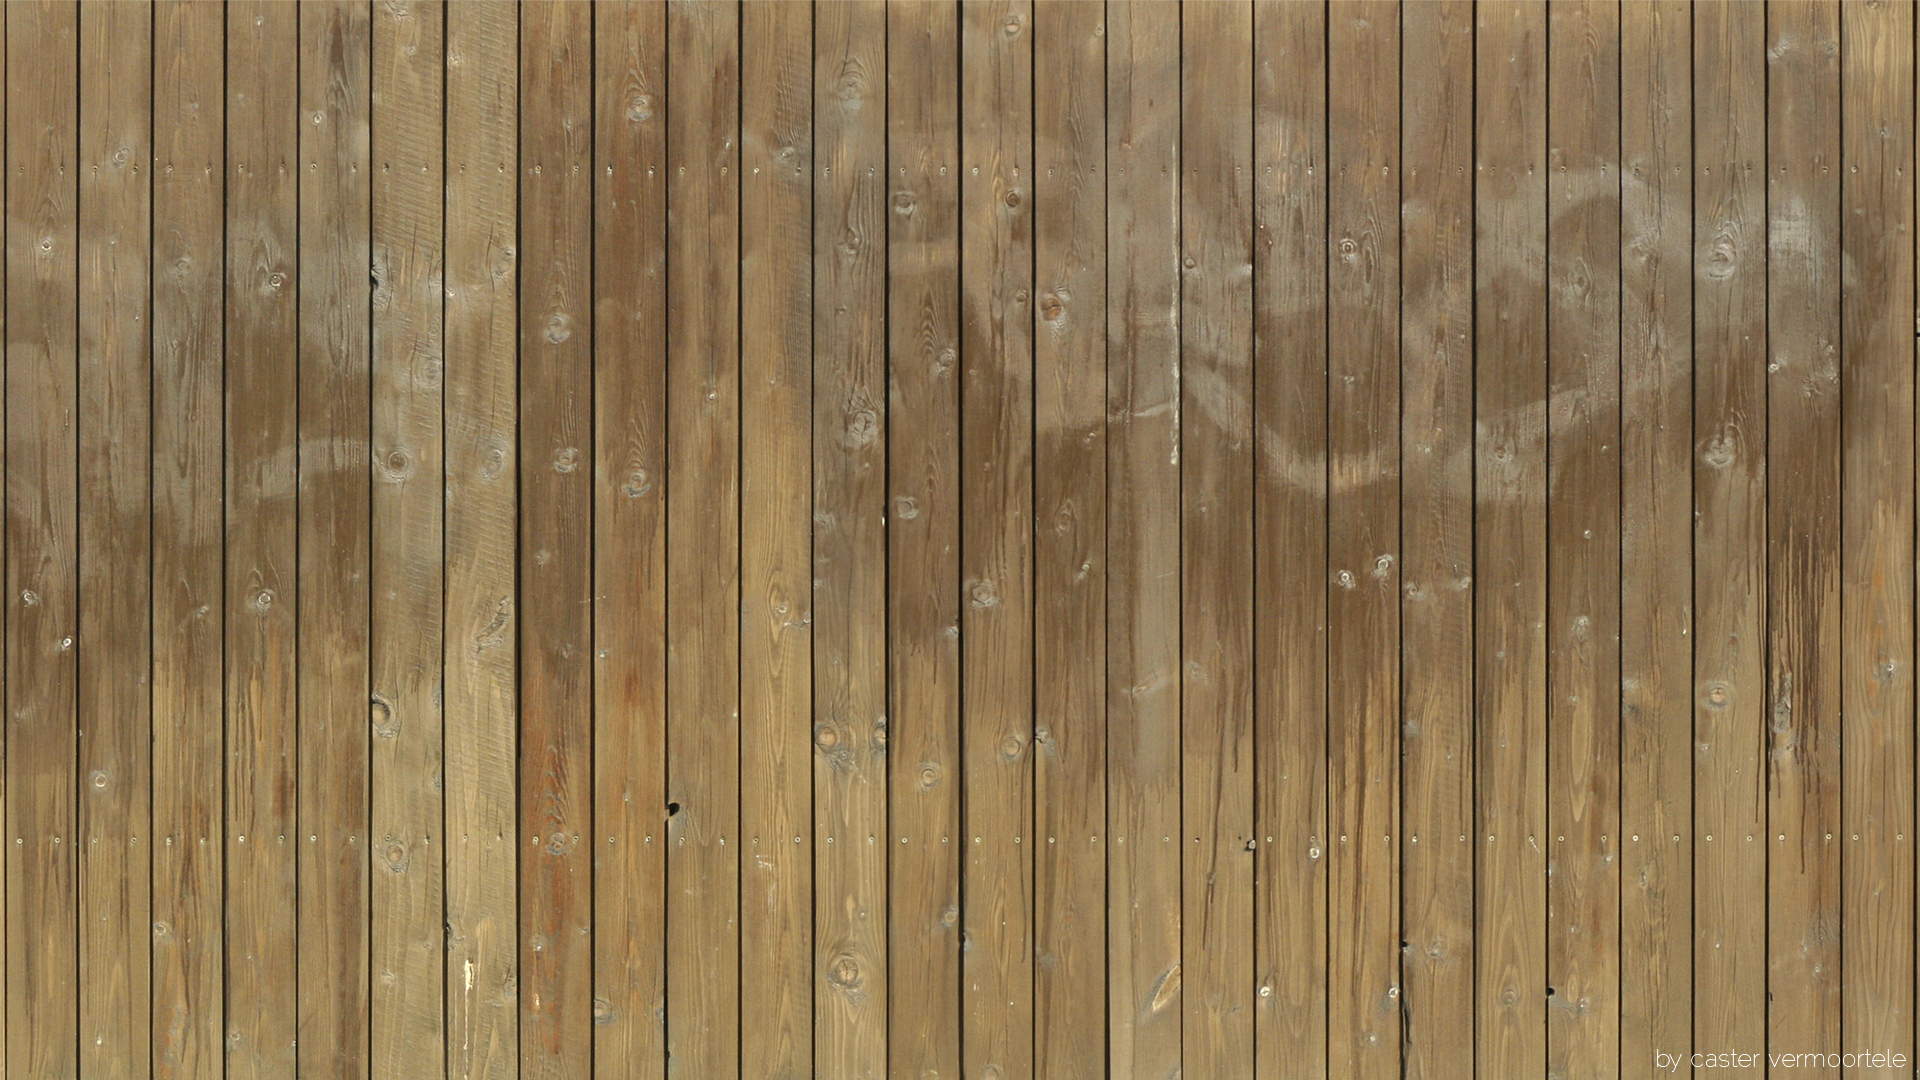 General 1920x1080 wood closeup wooden surface texture wood texture